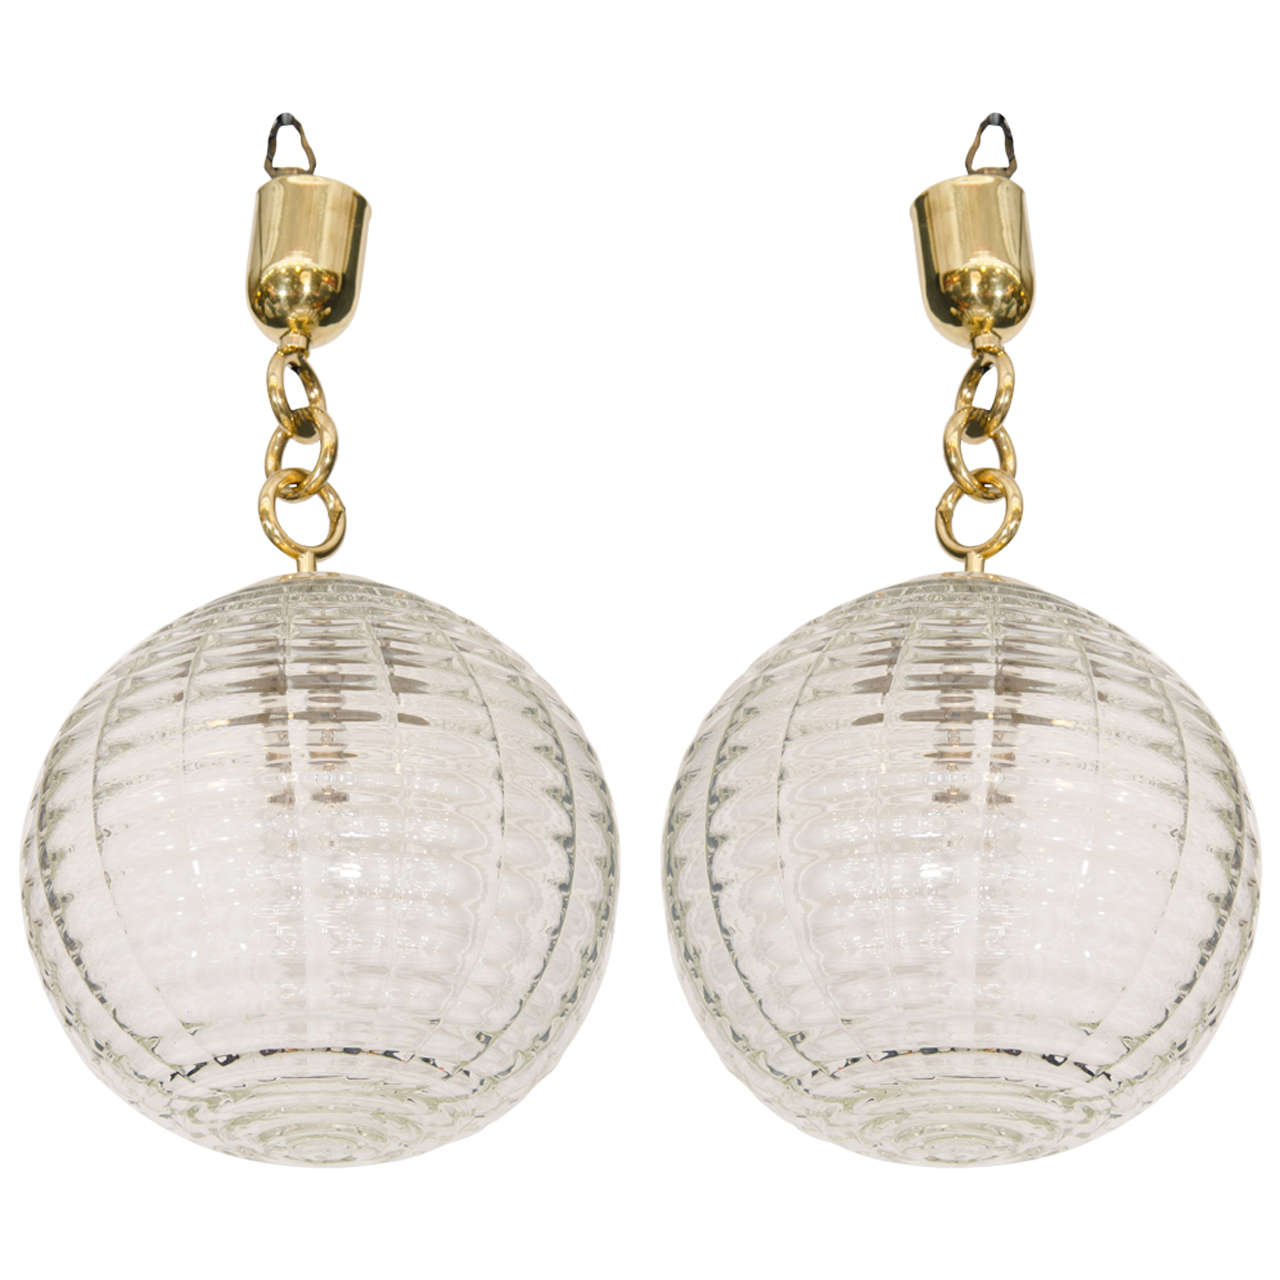 Midcentury Pair of Venini Glass Globe Pendant Lights or Lanterns